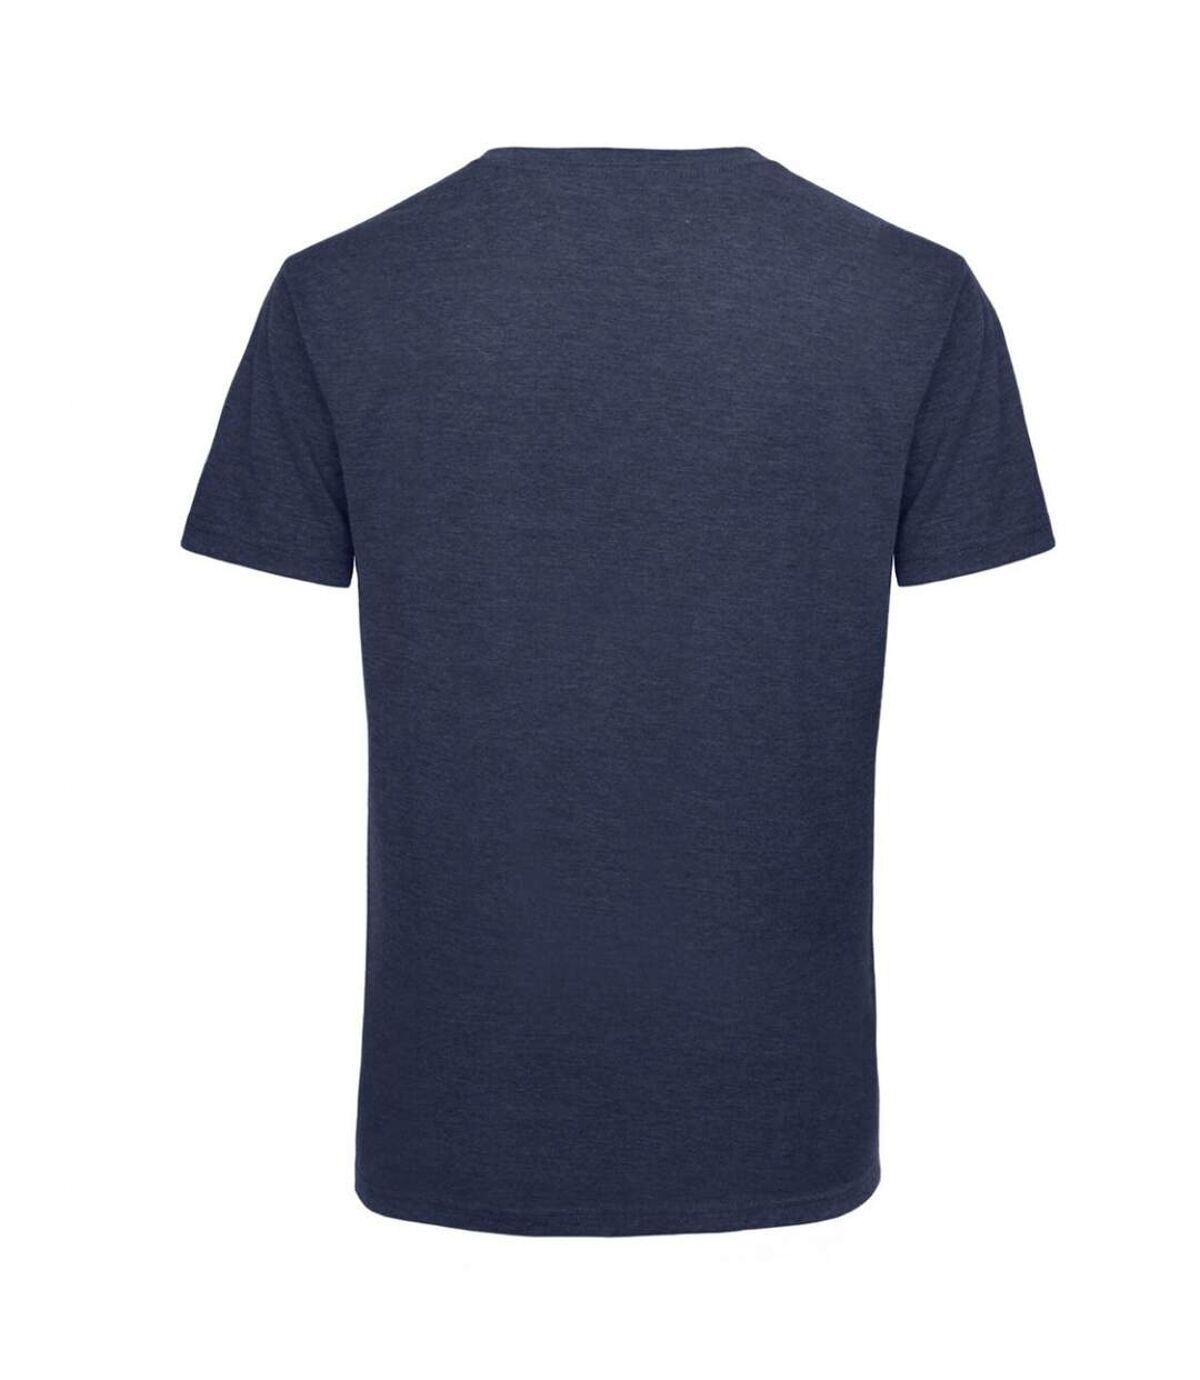 B&C Favourite - T-shirt col V - Homme (Bleu marine chiné) - UTBC3639